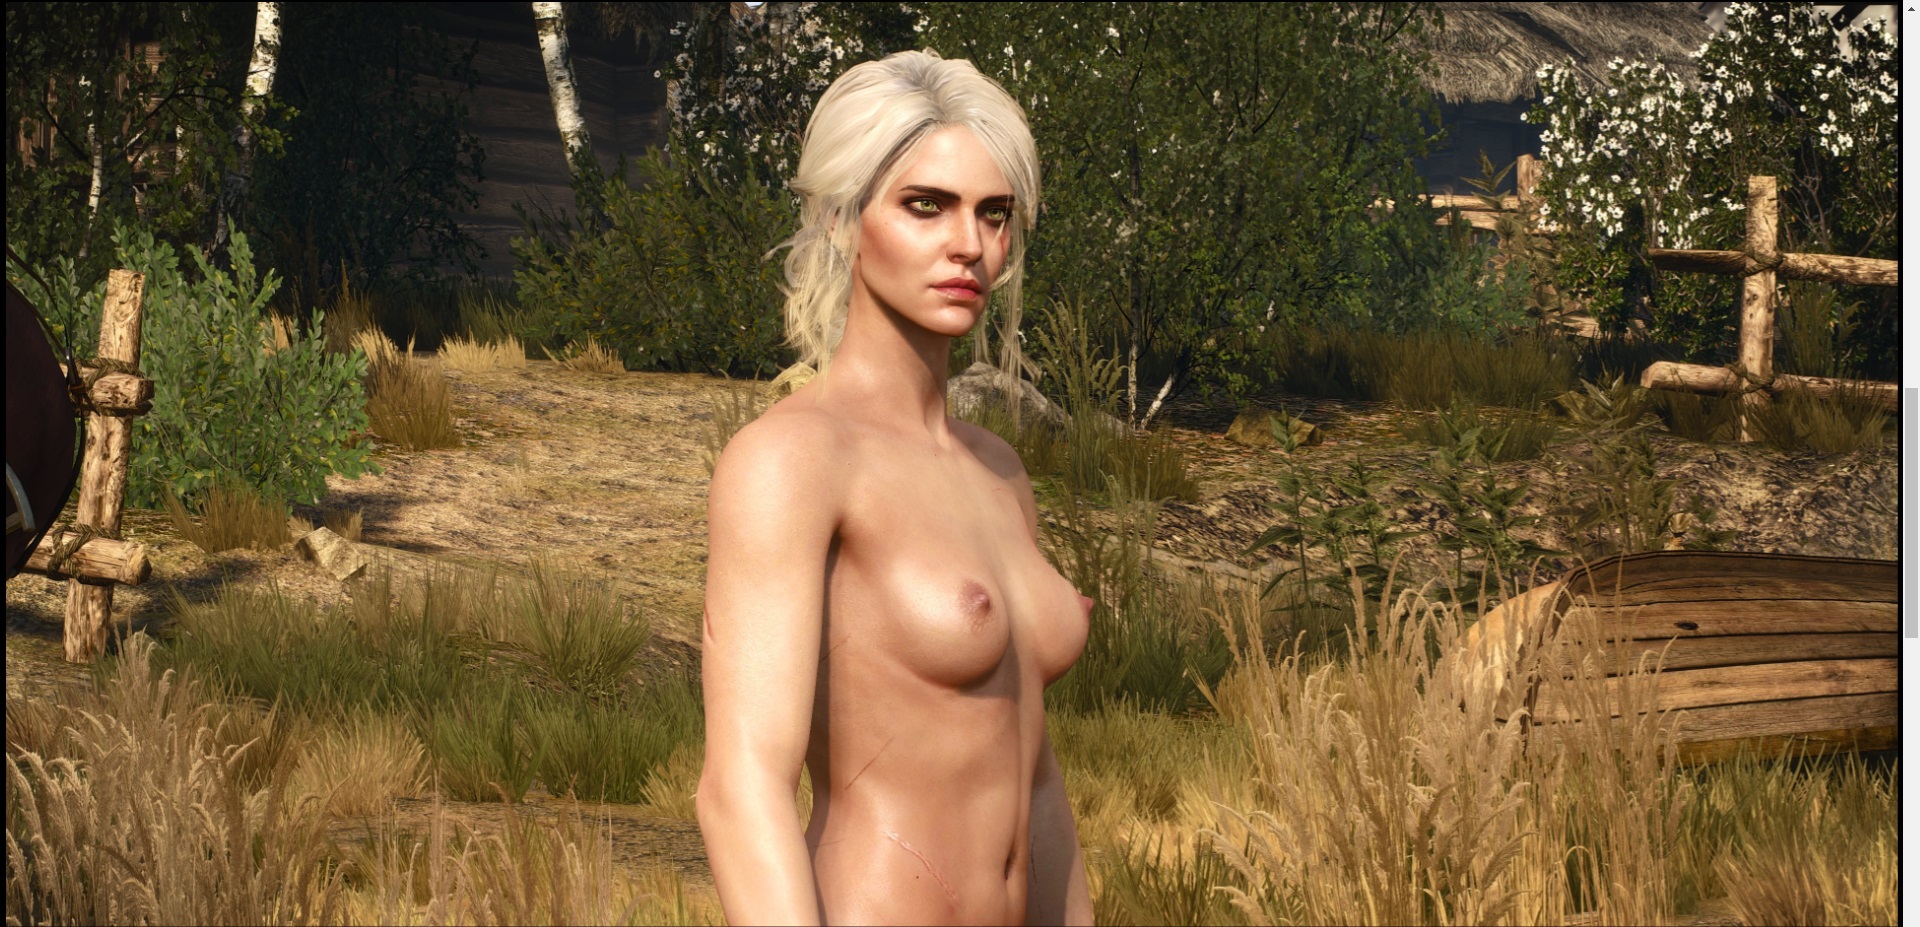 Witcher 3 Nude Mod.